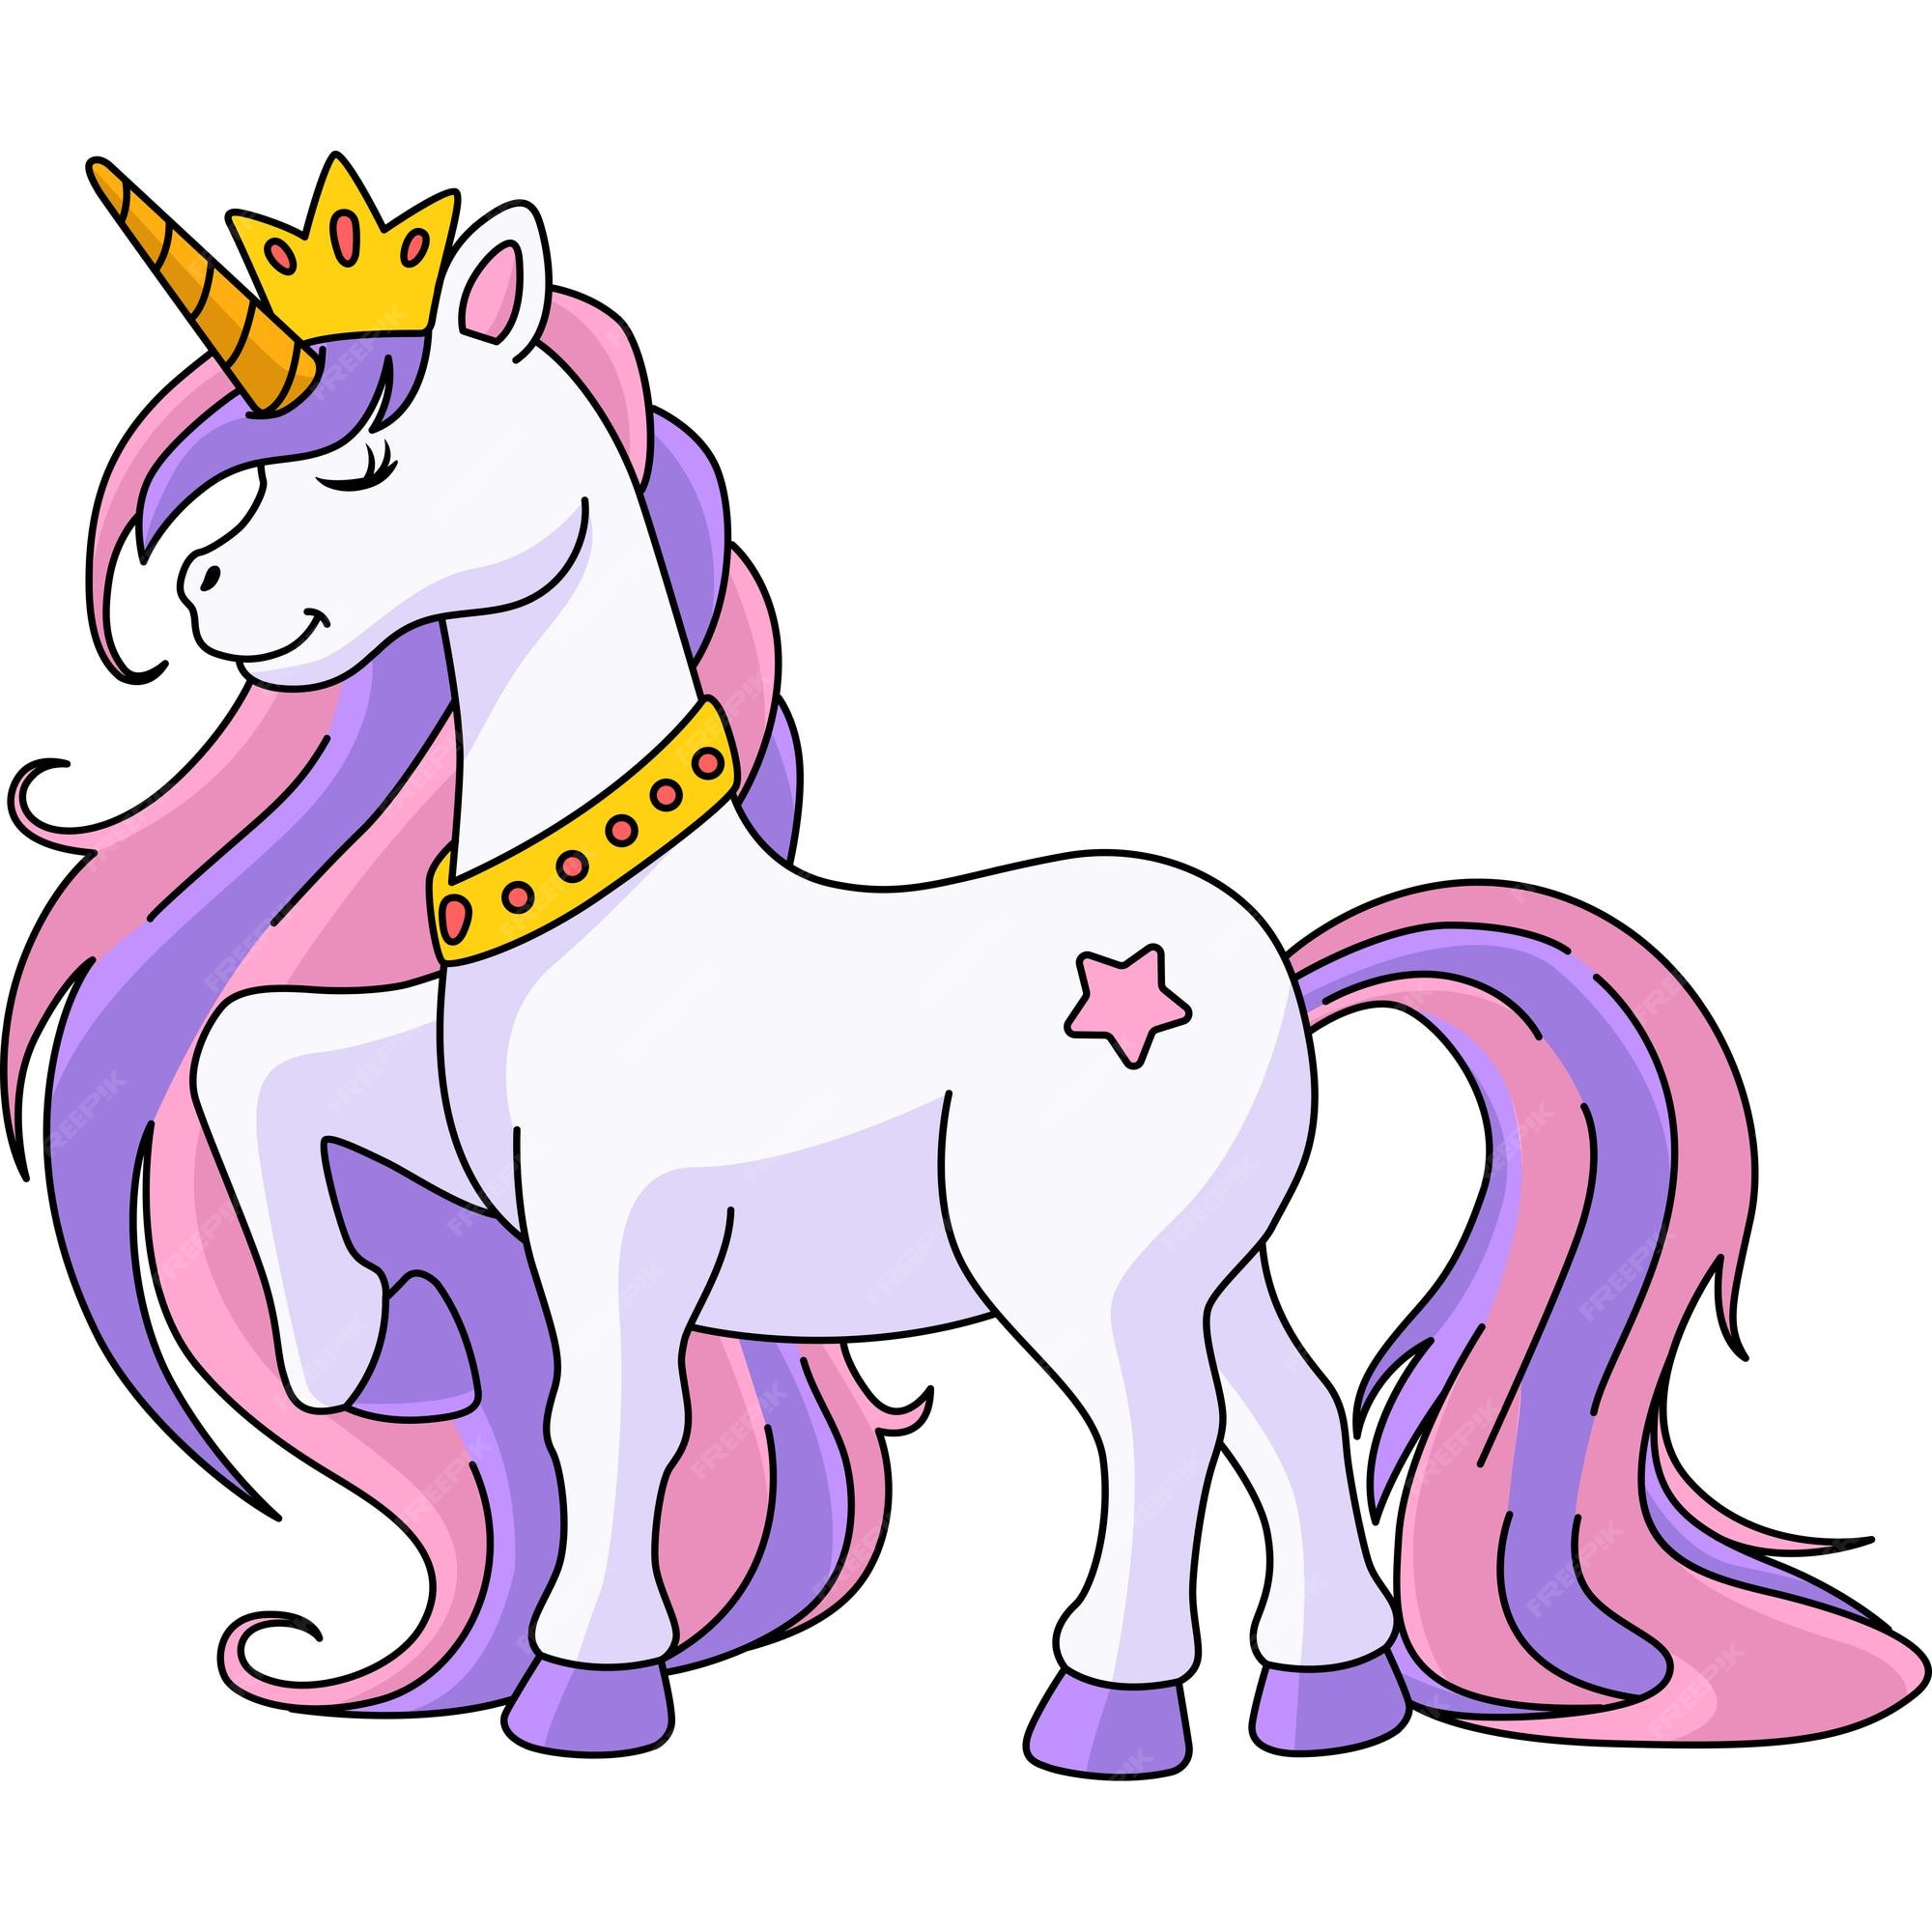 Premium Vector | This cartoon clipart shows a unicorn princess illustration